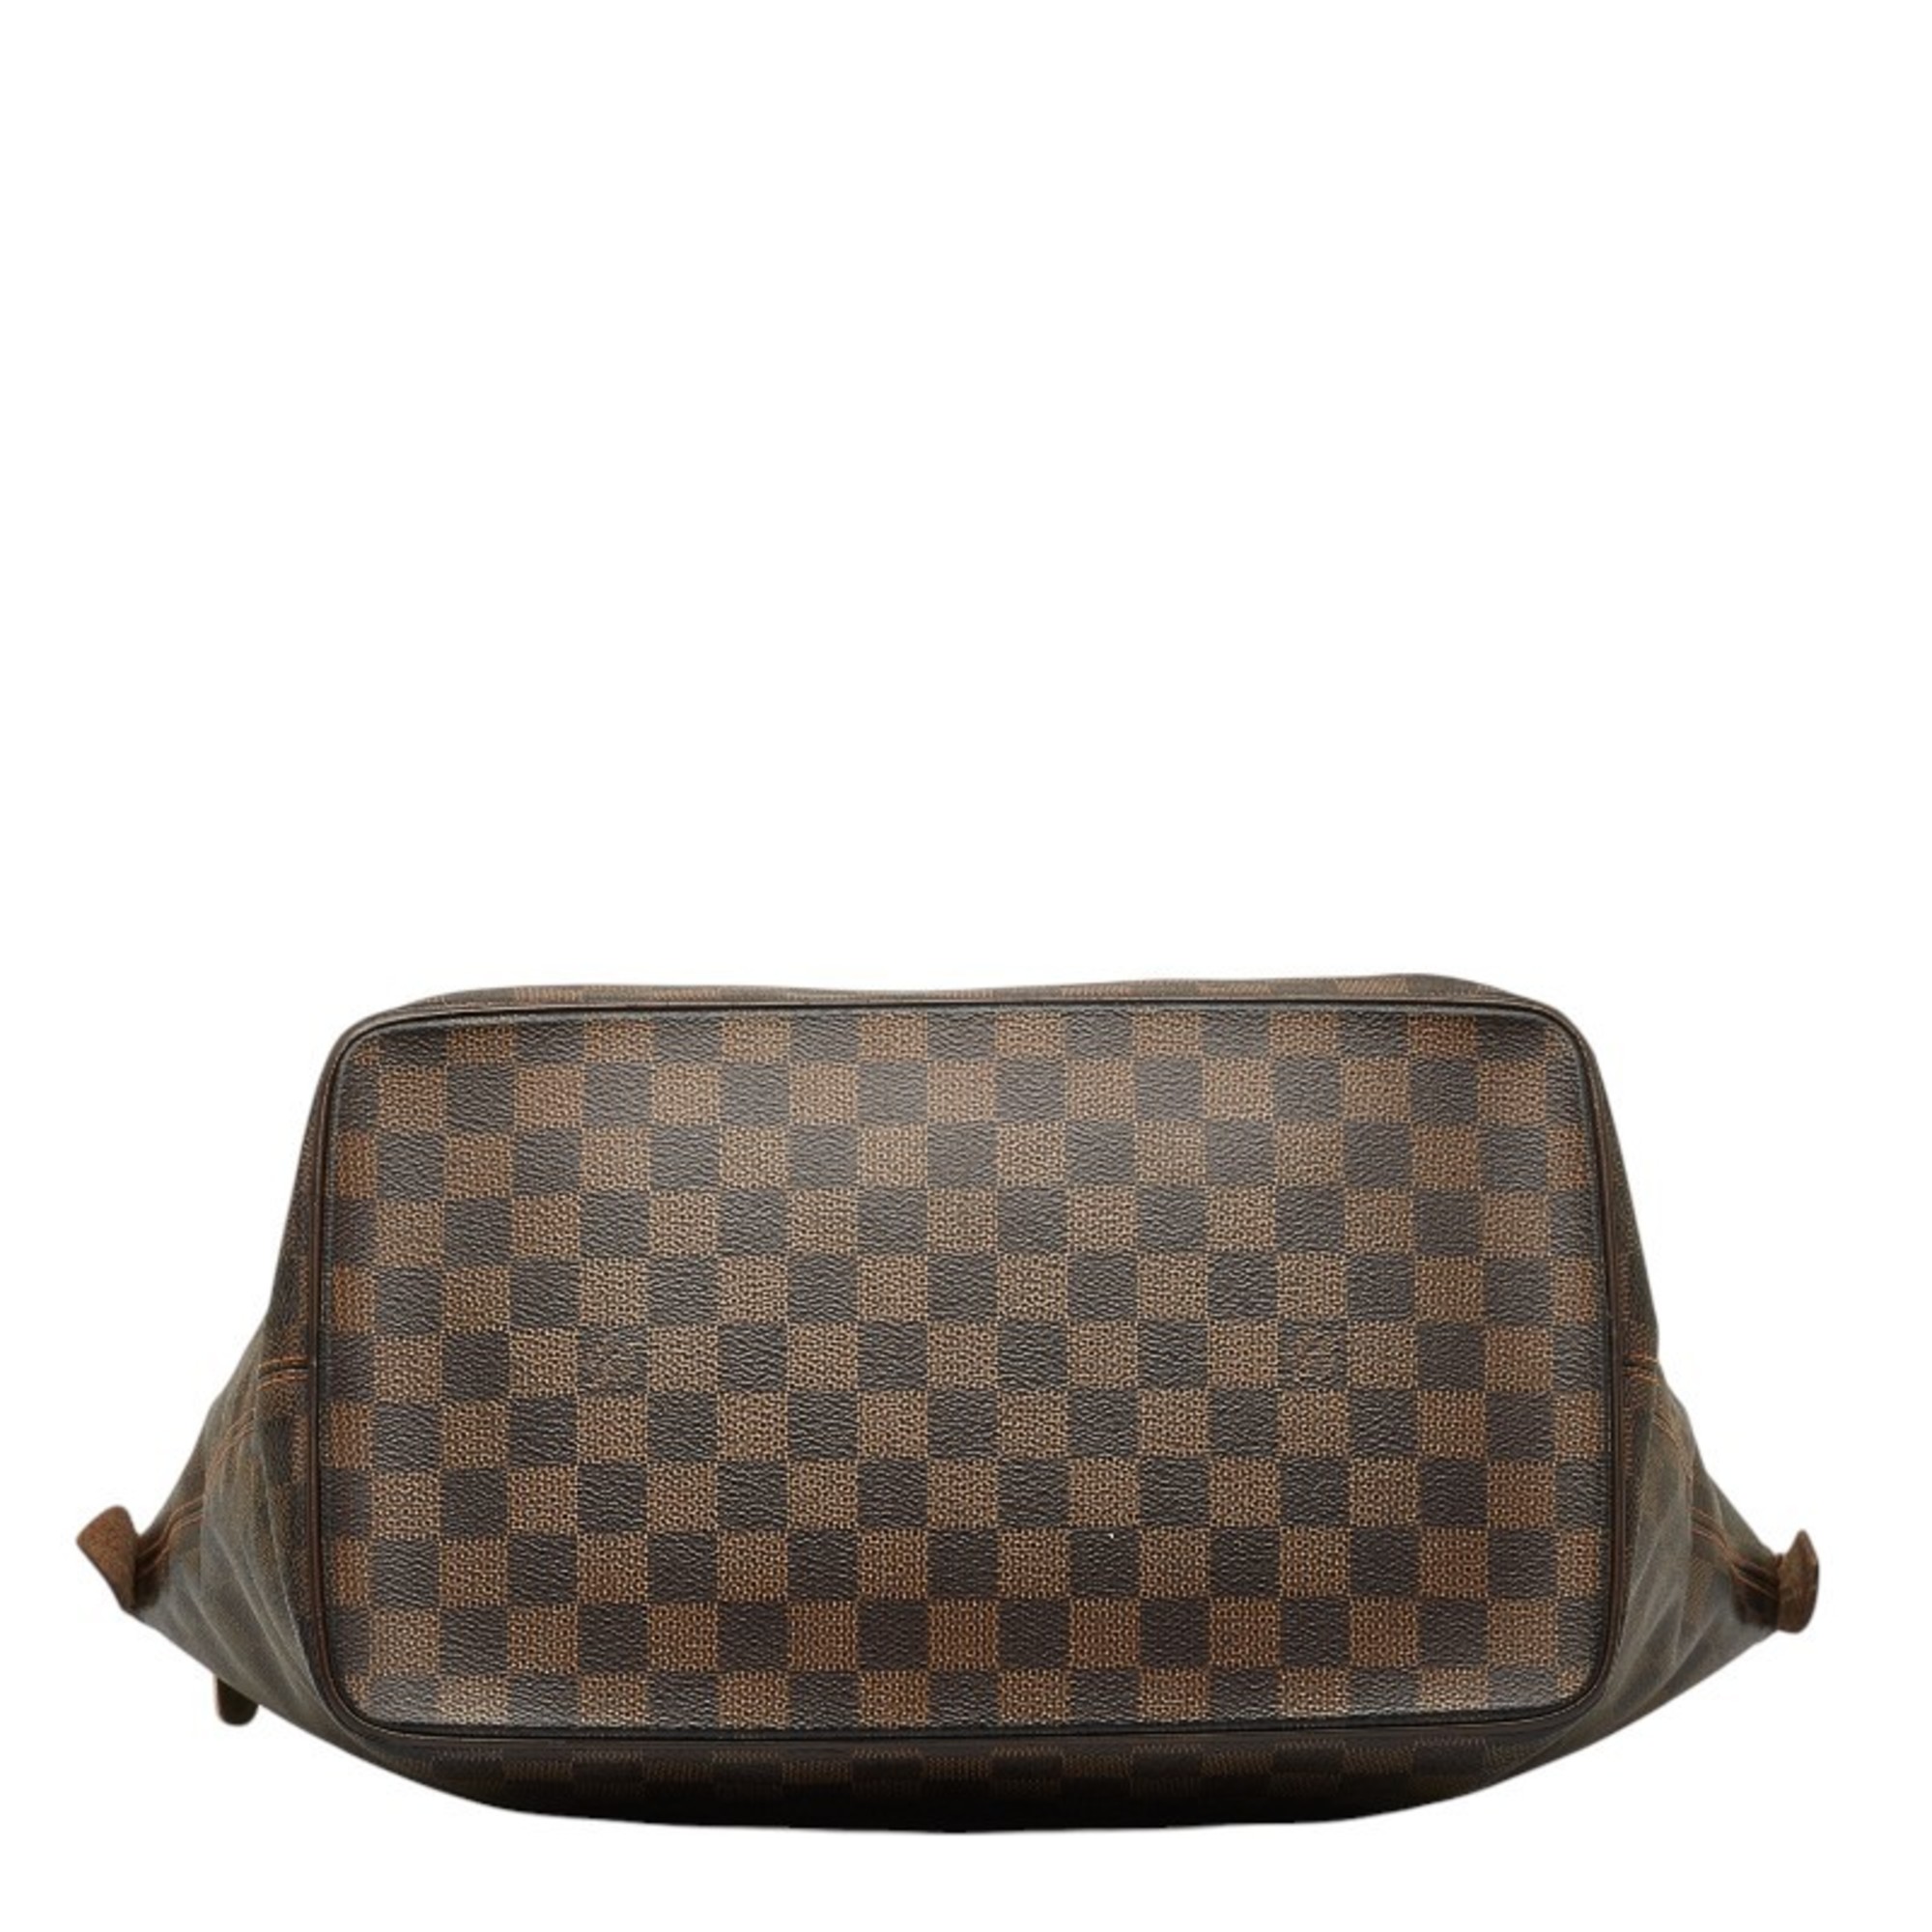 Louis Vuitton Damier Saleya MM Handbag Tote Bag N51188 Brown PVC Leather Women's LOUIS VUITTON